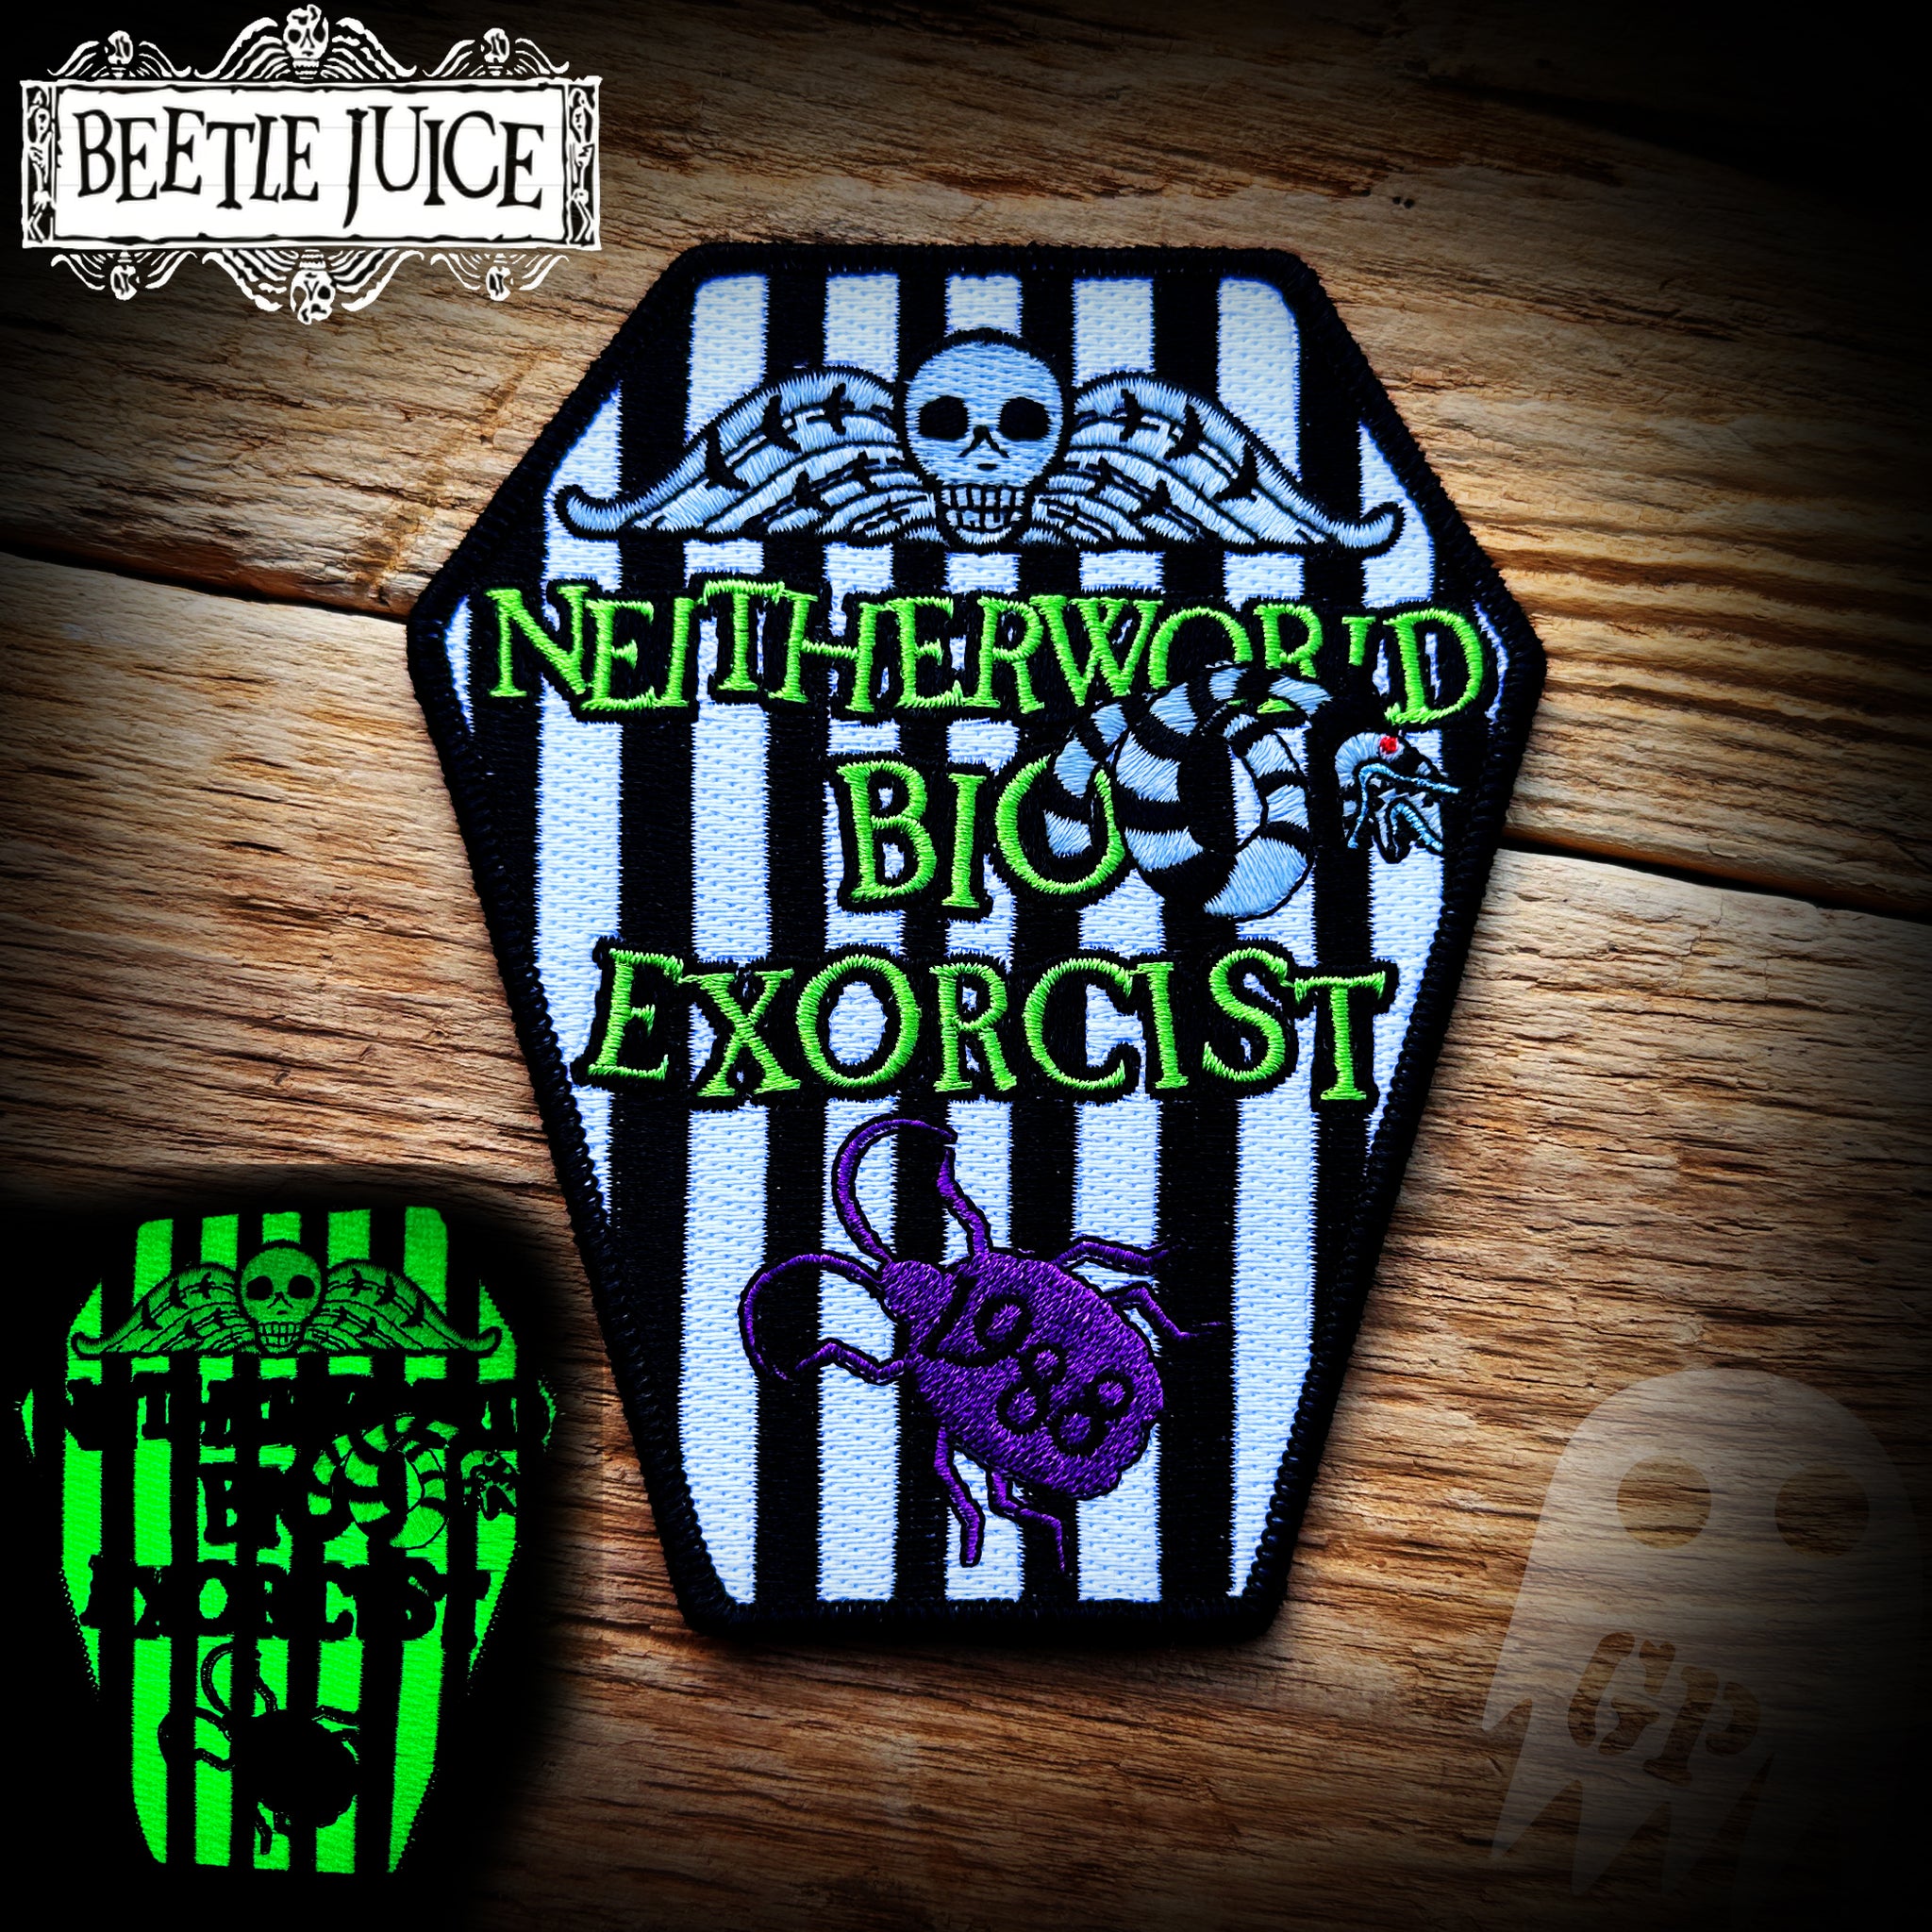 #80 - Neithworld Bio Exorcist Patch - Beetlejuice - Glows in the dark!